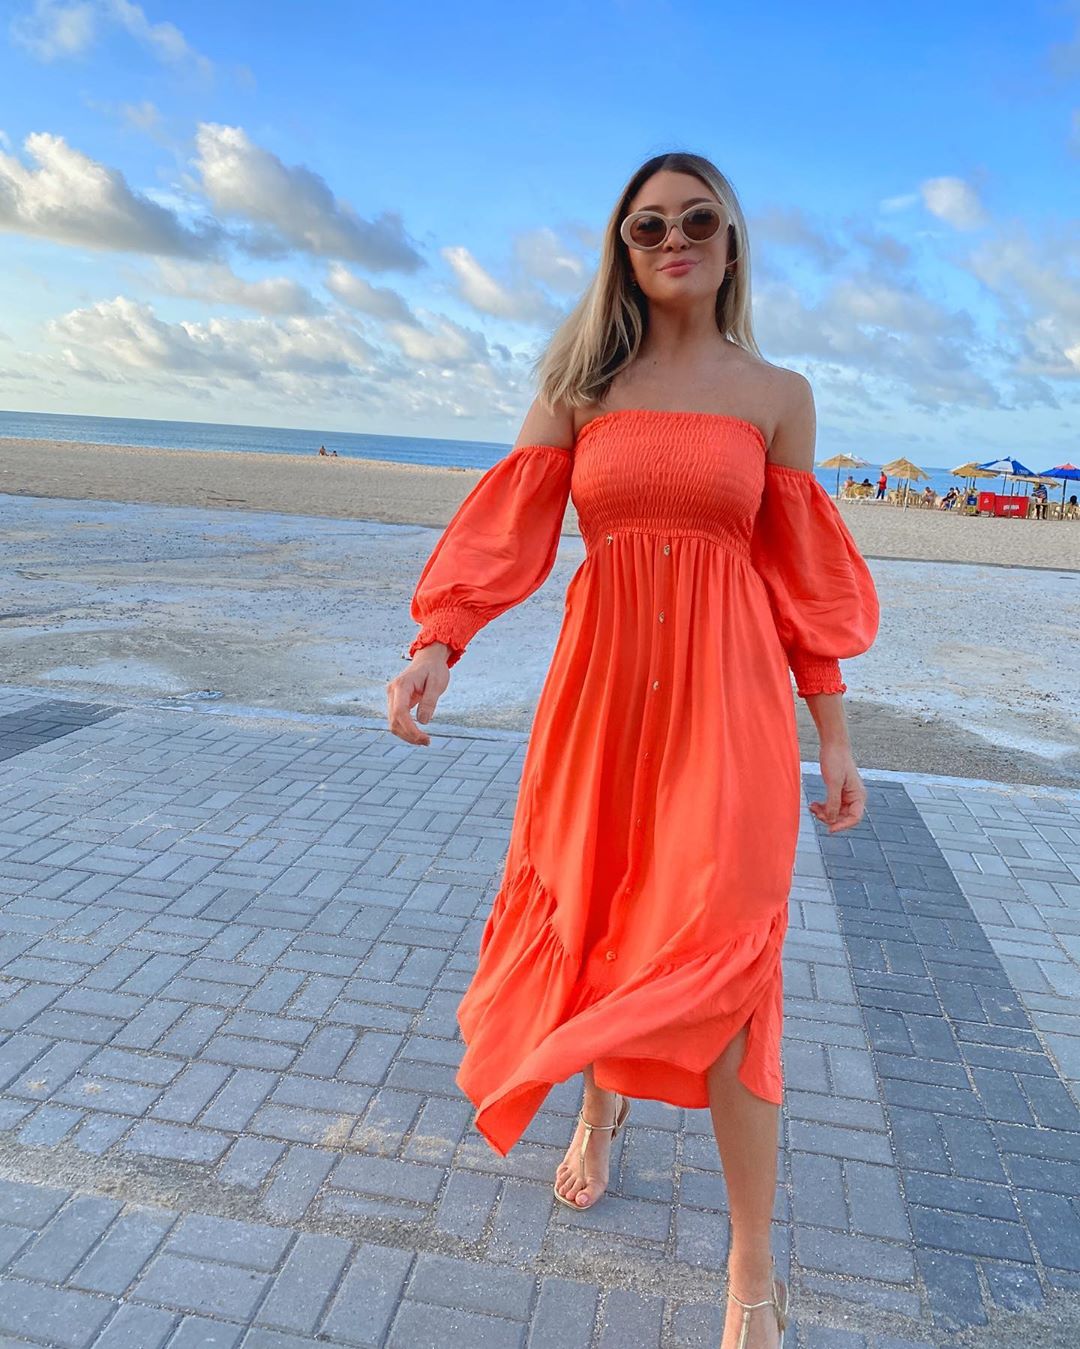 Vestido naranja: 45 looks elegantes para inspirarte